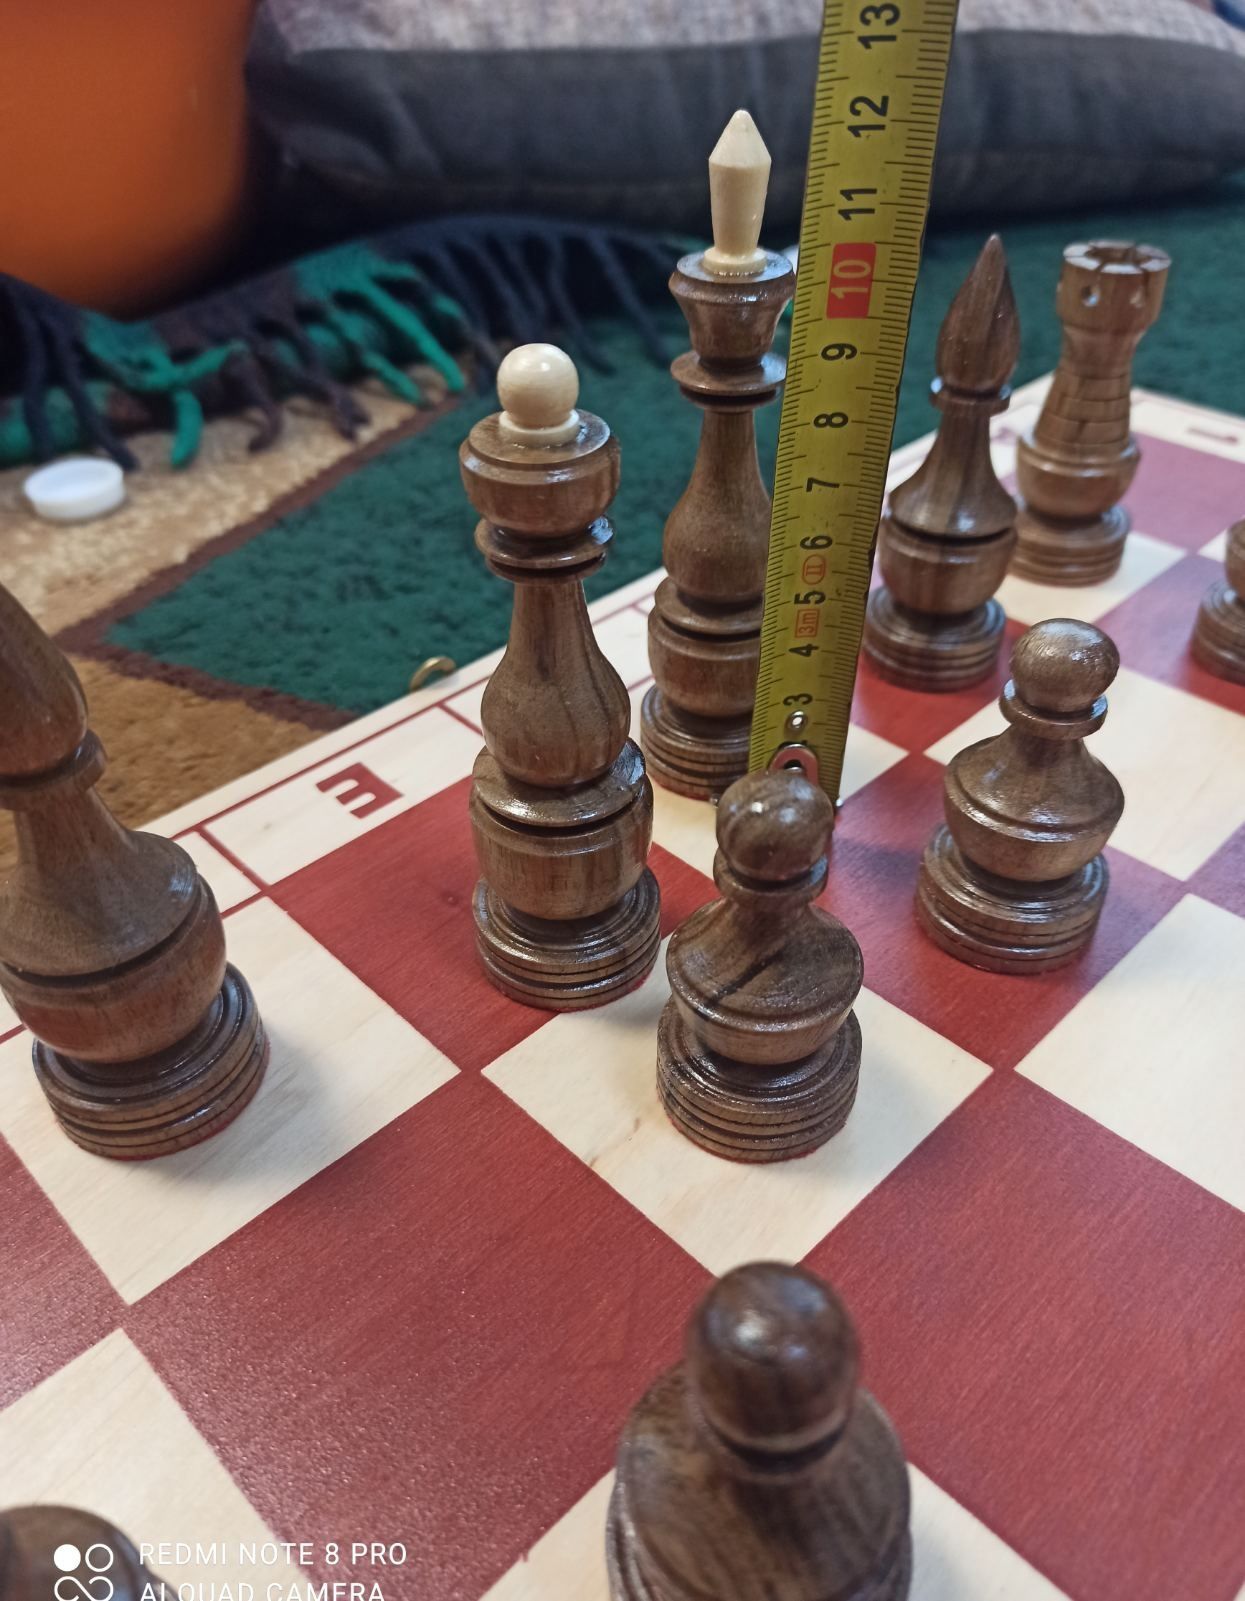 Шахмати, шашки, нарди шахматні фігури ручної роботи